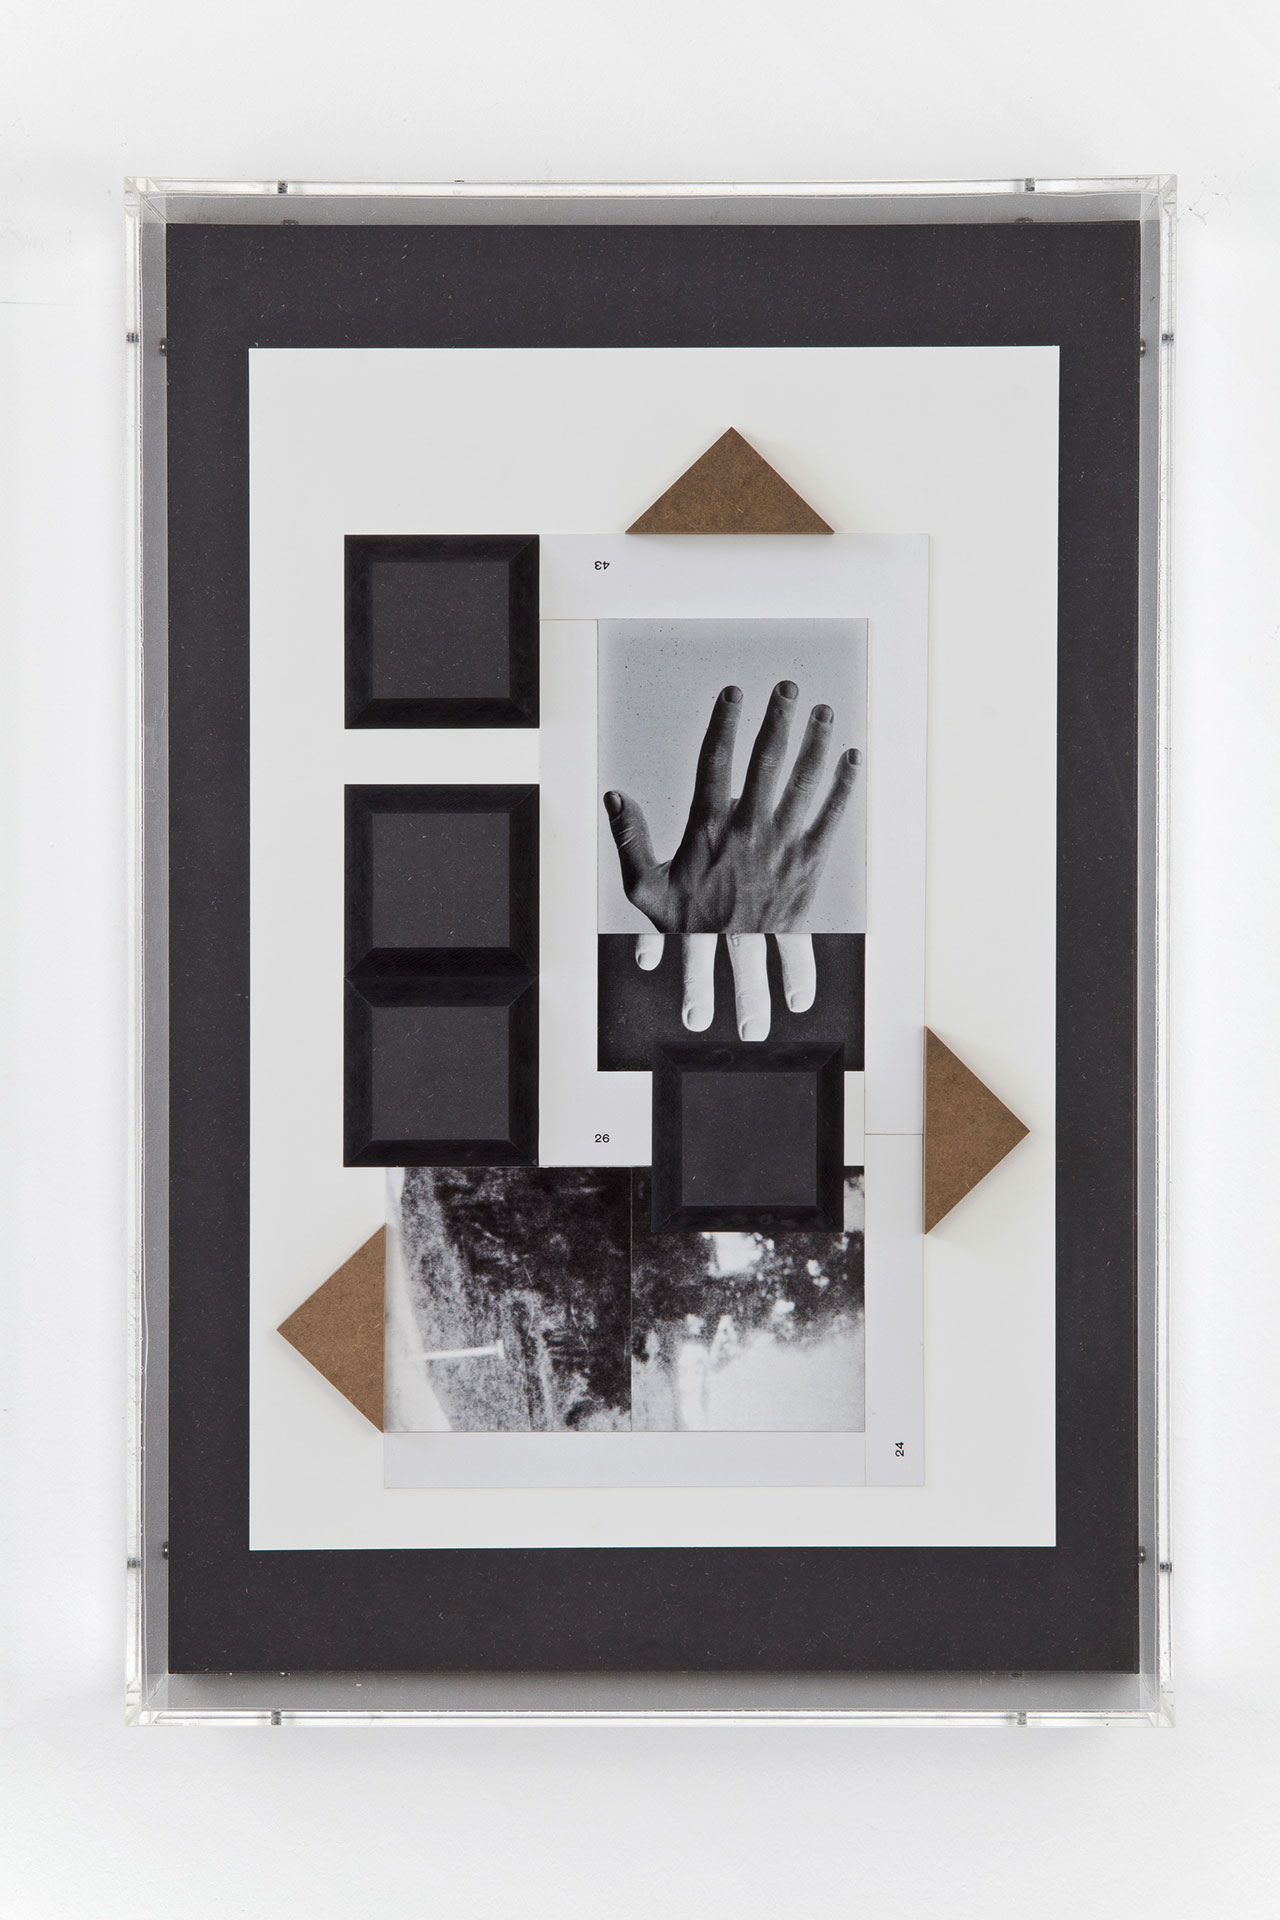 Bernhard Hosa，《超自然建构主义》#07，2016 年。MDF，喷墨打印，亚克力玻璃，90 x 60 x 12 厘米。 伯恩哈德·霍萨摄。 向艺术家致敬。